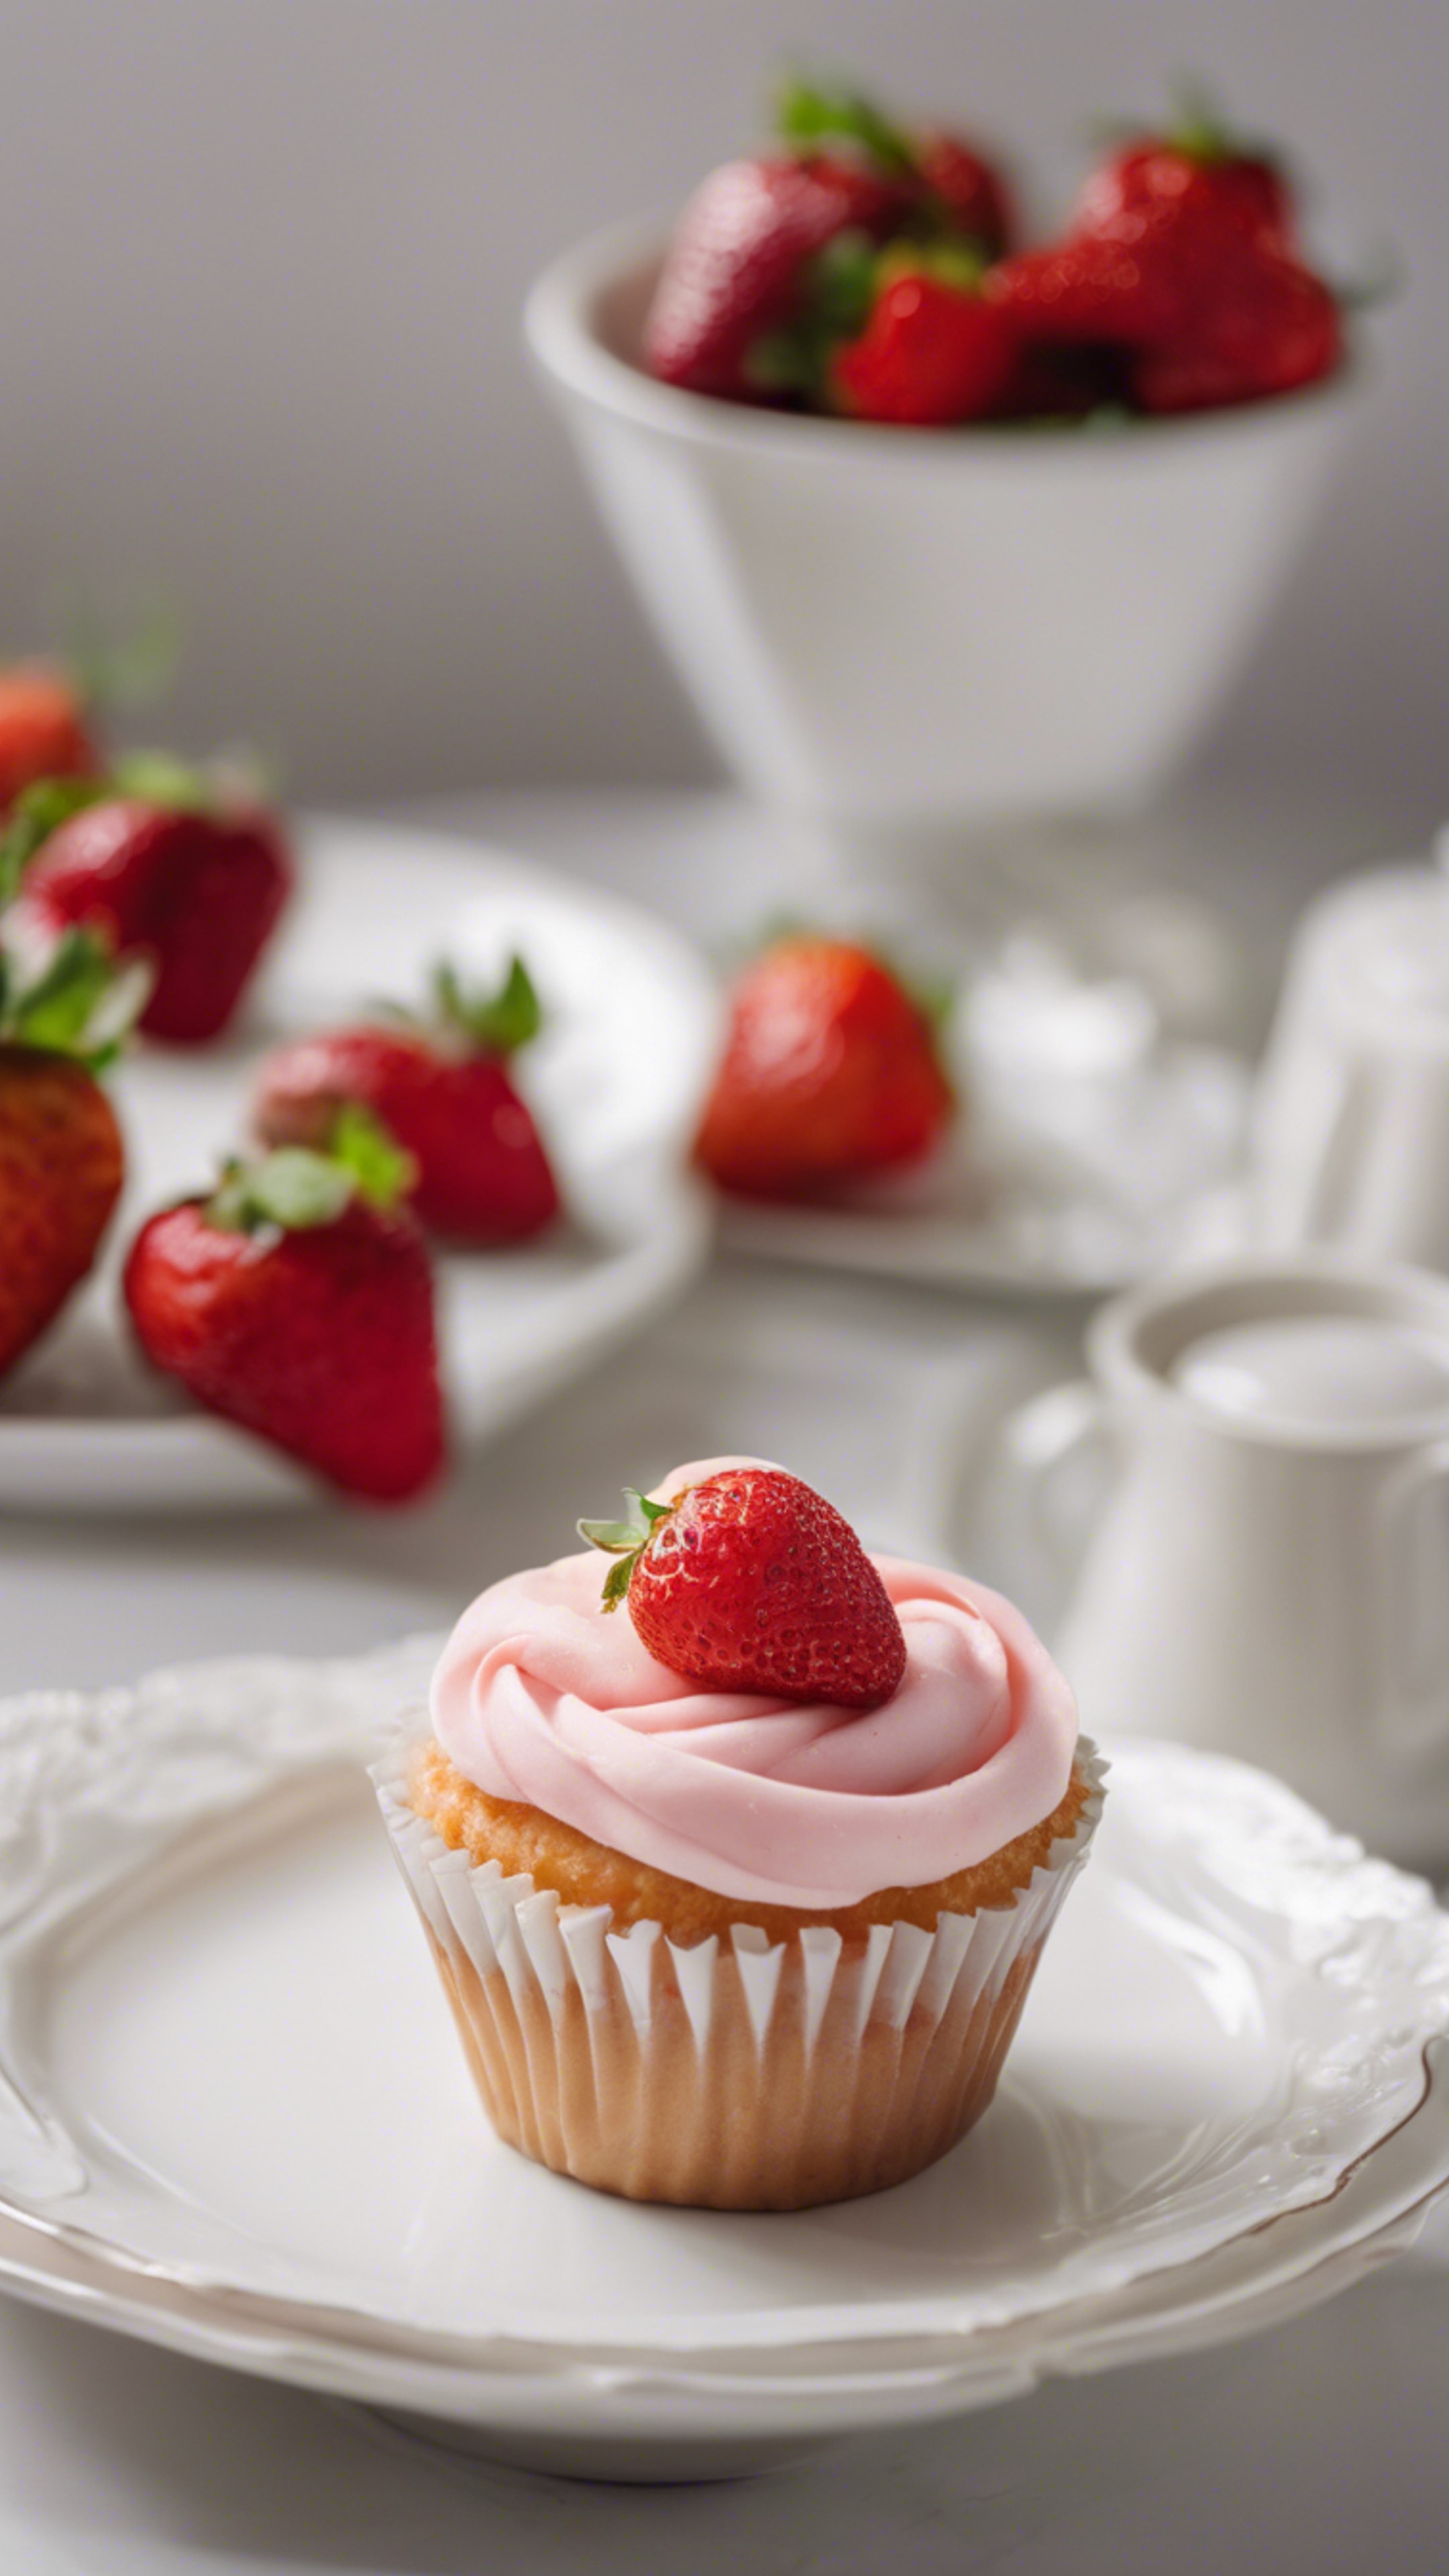 A single strawberry cupcake on a white porcelain plate in bright daylight. Divar kağızı[ddcb3576222e4604b5c8]